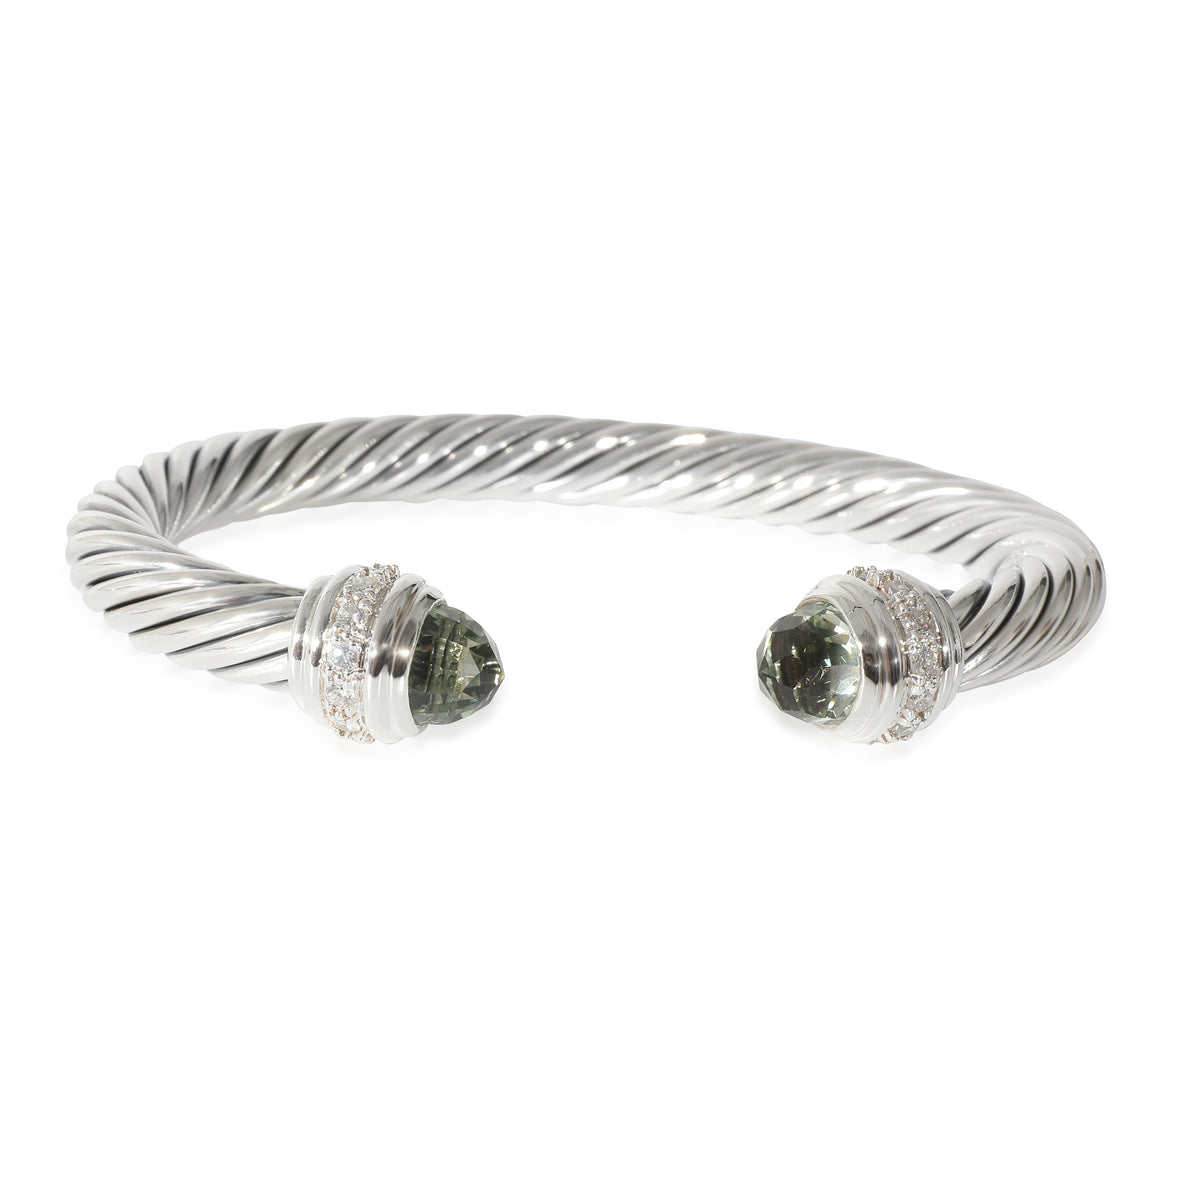 David Yurman Prasiolite Diamond 7mm Cable Bracelet in Sterling Silver 0.41 CTW